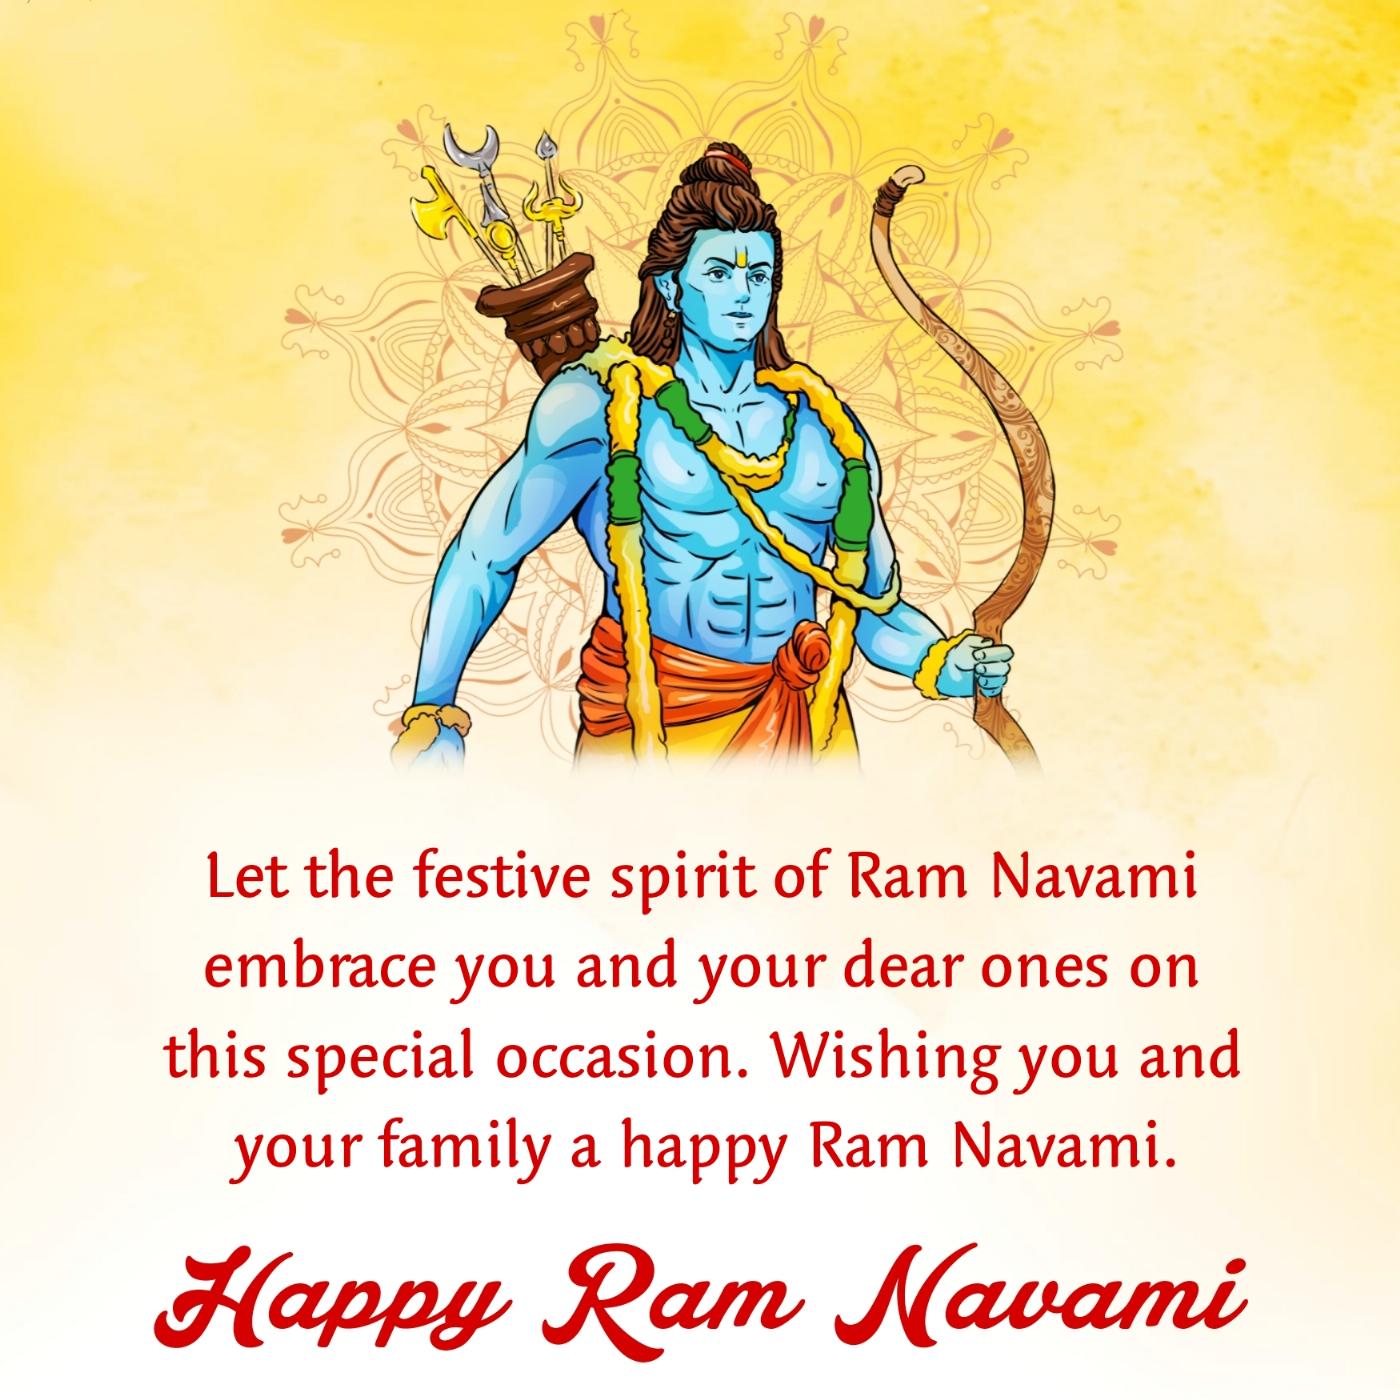 Let the festive spirit of Ram Navami embrace you